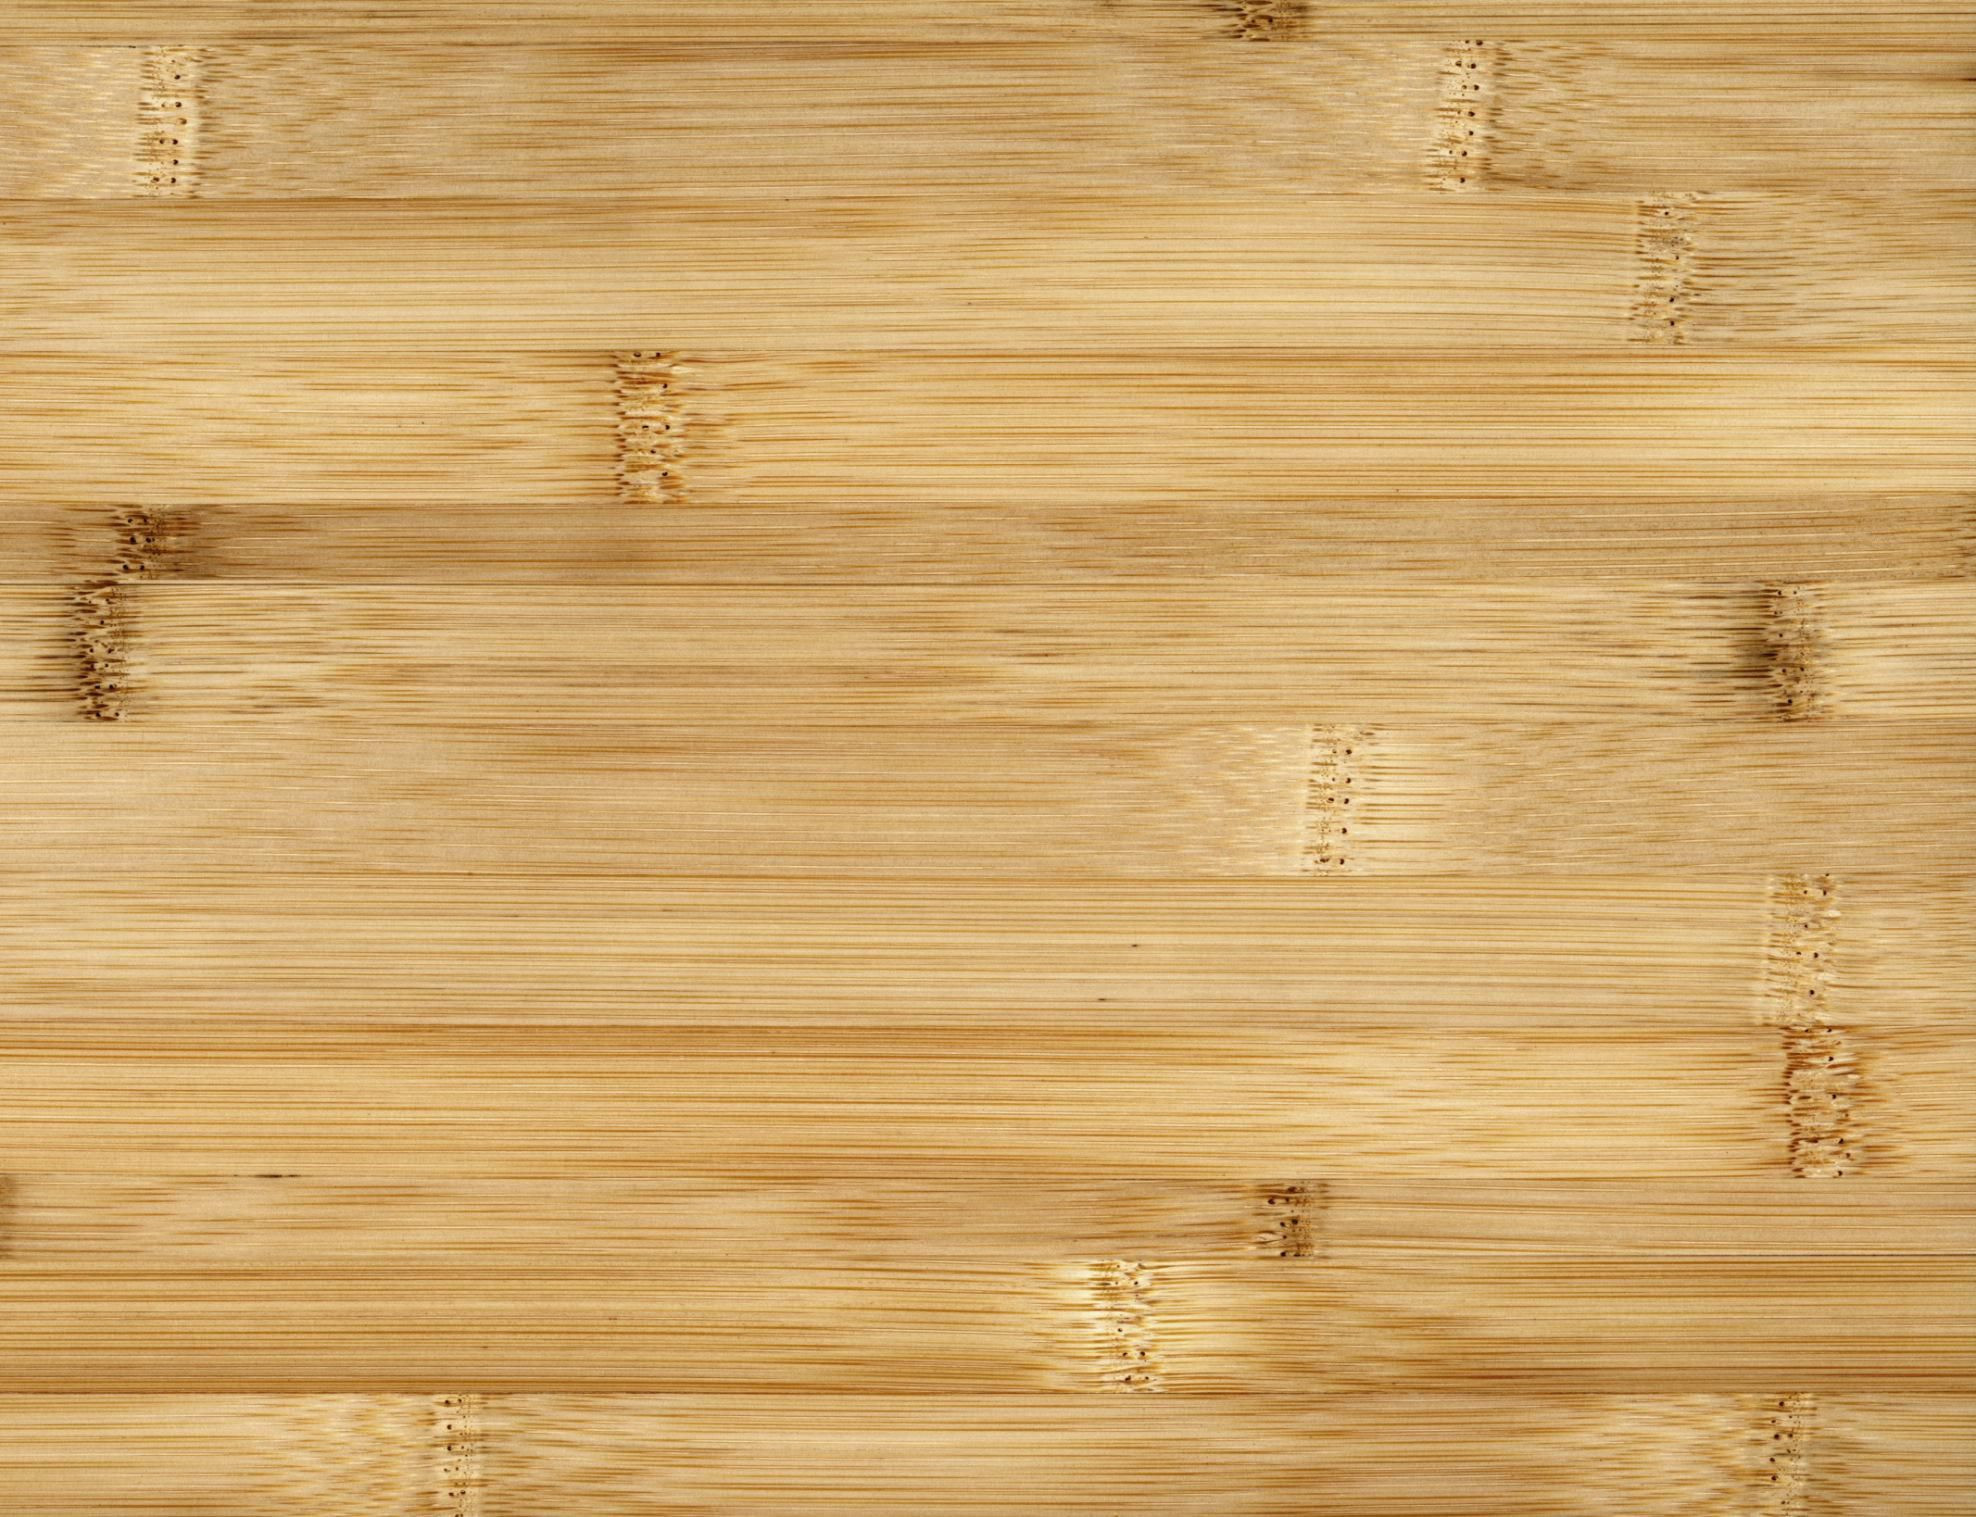 22 Fashionable Liquid Hardwood Floor Refinishing Products 2023 free download liquid hardwood floor refinishing products of how to clean bamboo flooring intended for 200266305 001 56a2fd815f9b58b7d0d000cd